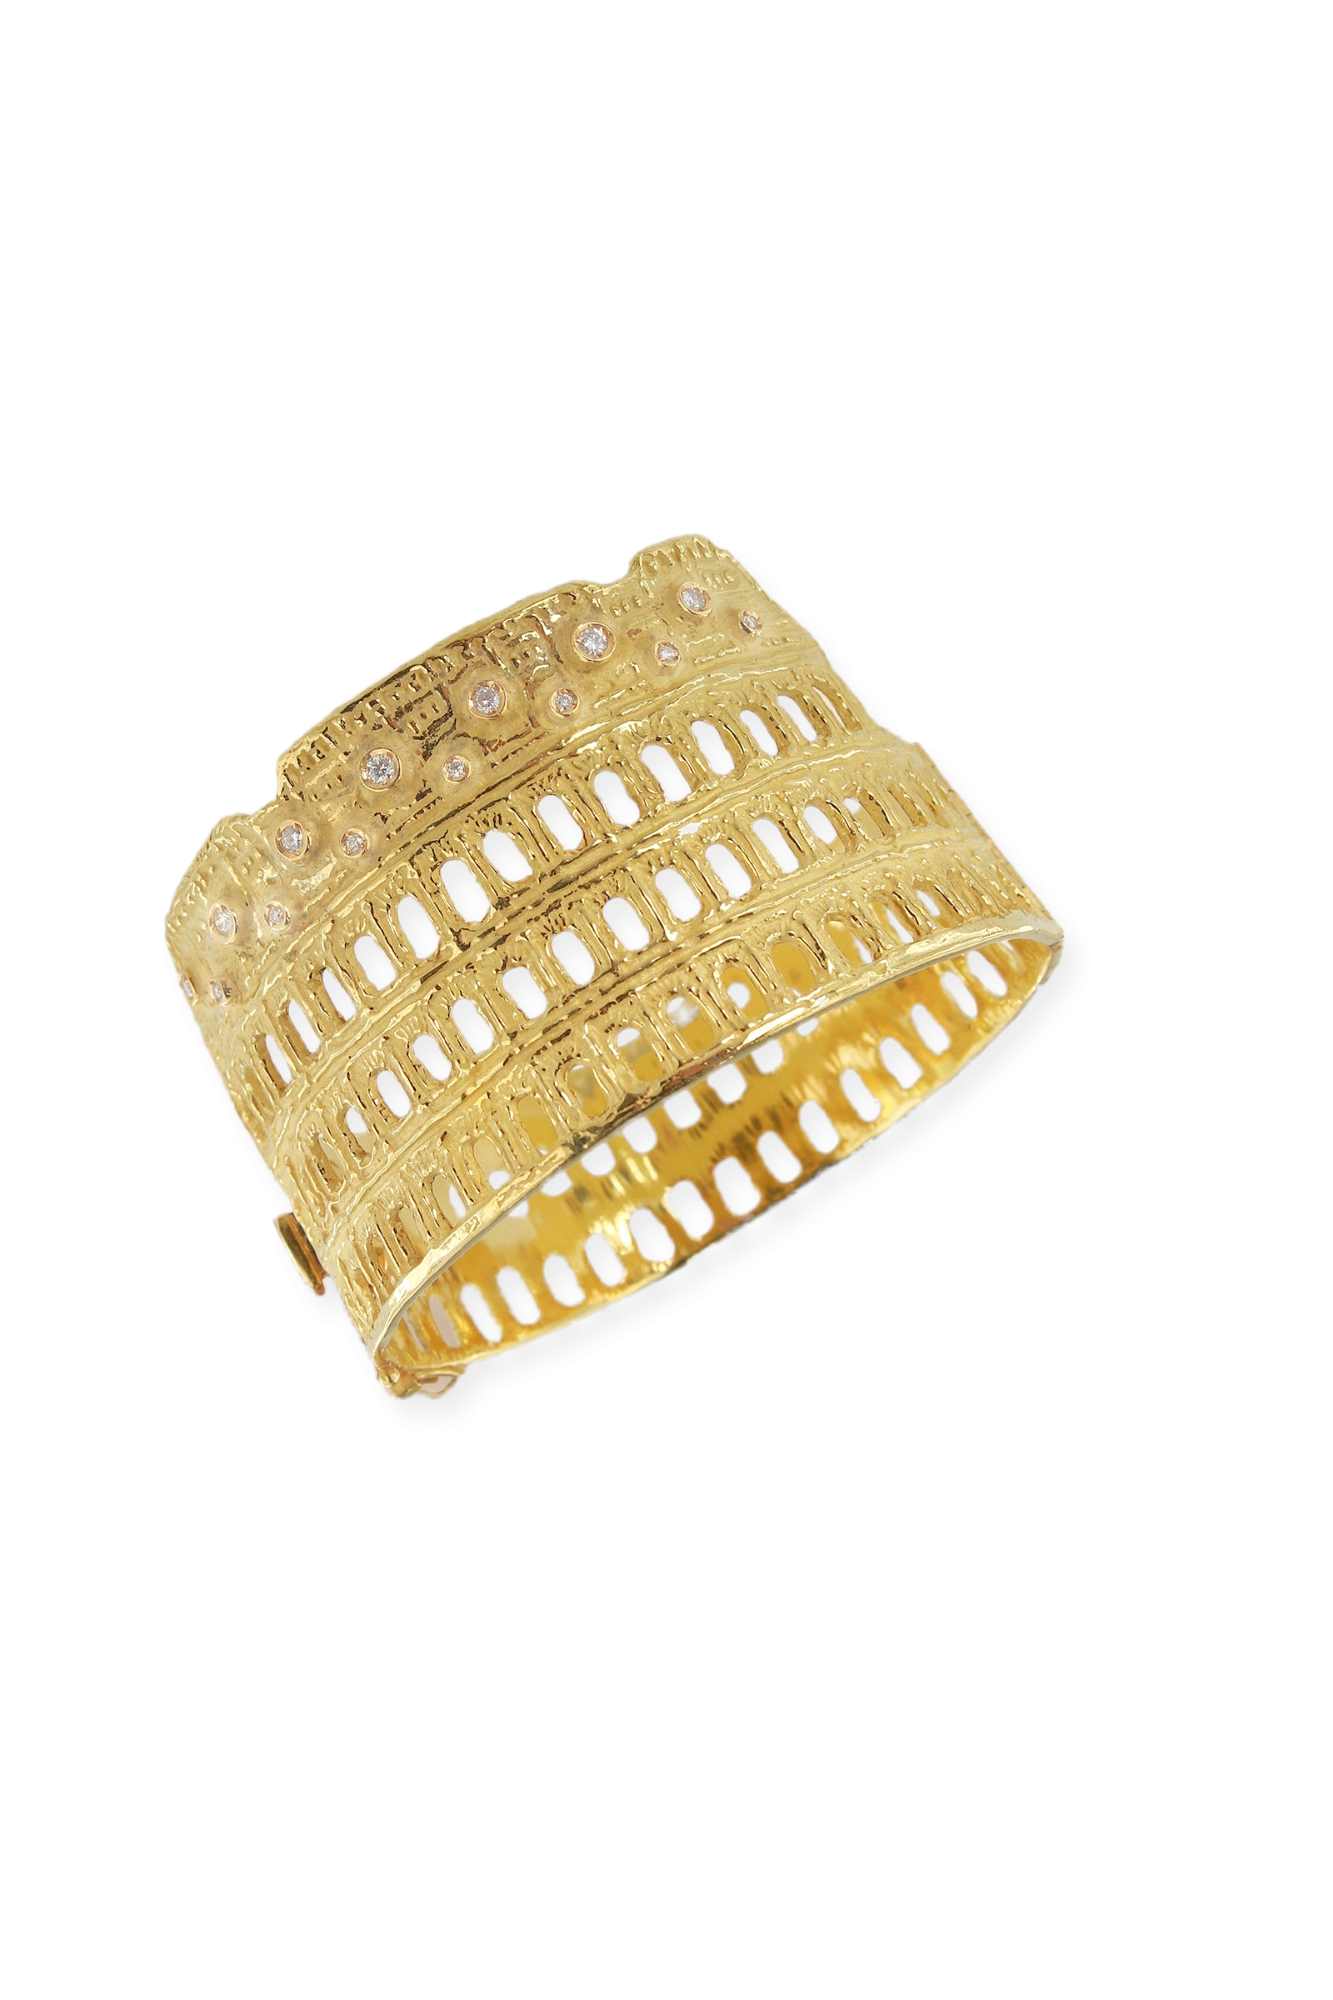 SB145C-18-Kt-Yellow-Gold-Colosseum-Cuff-Bracelet-with-Diamonds-1